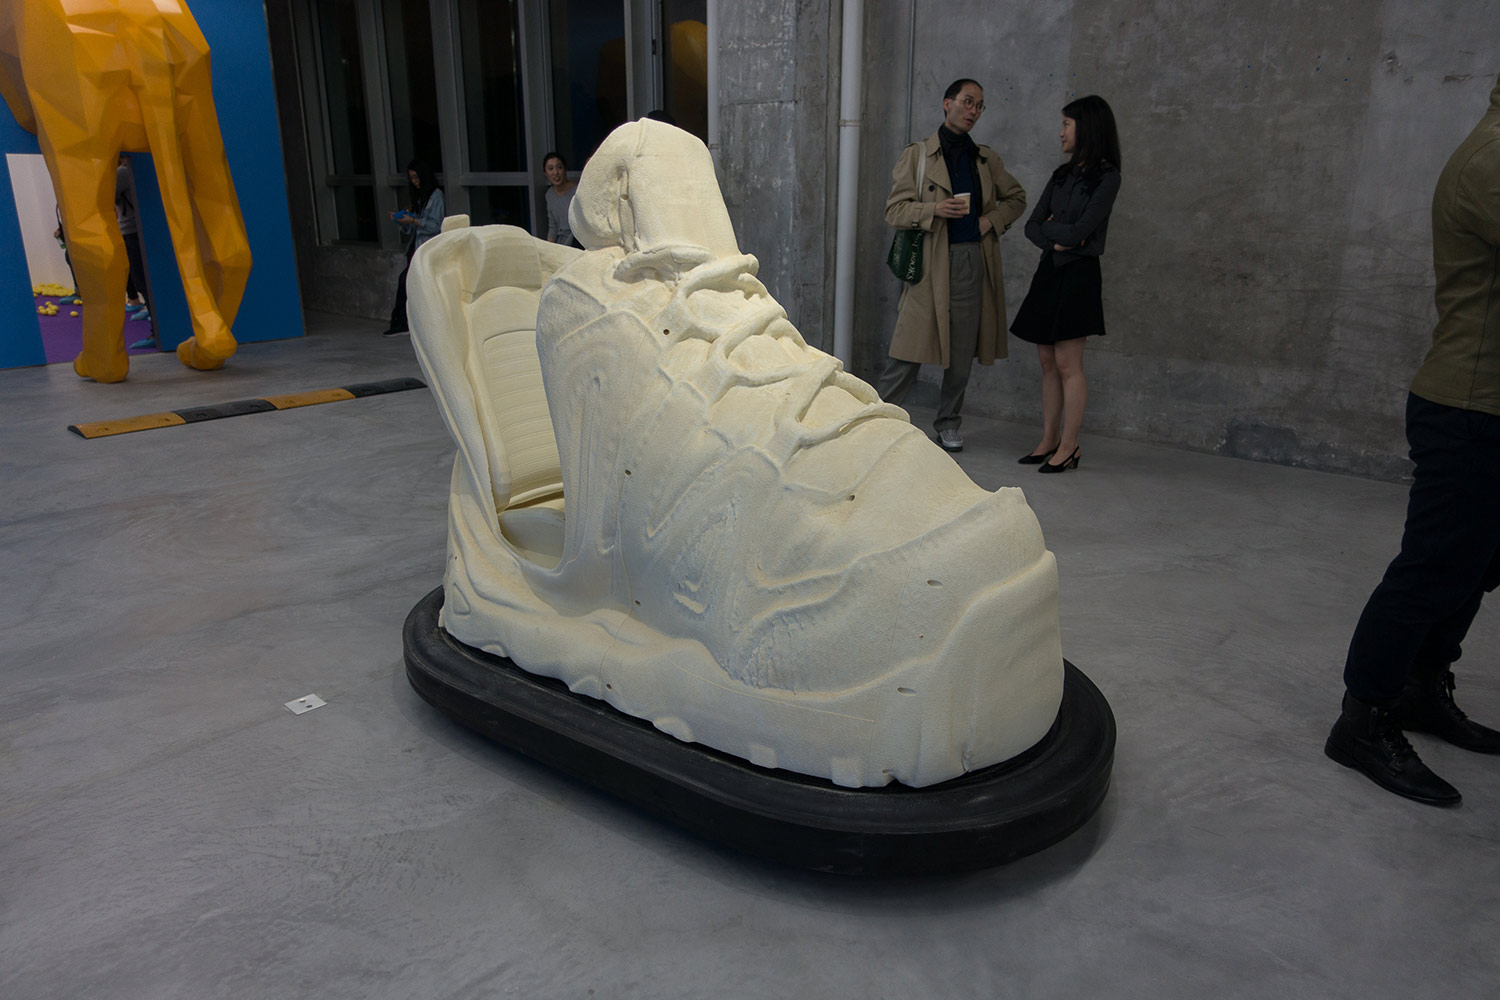 3D printed shoe and bumper car